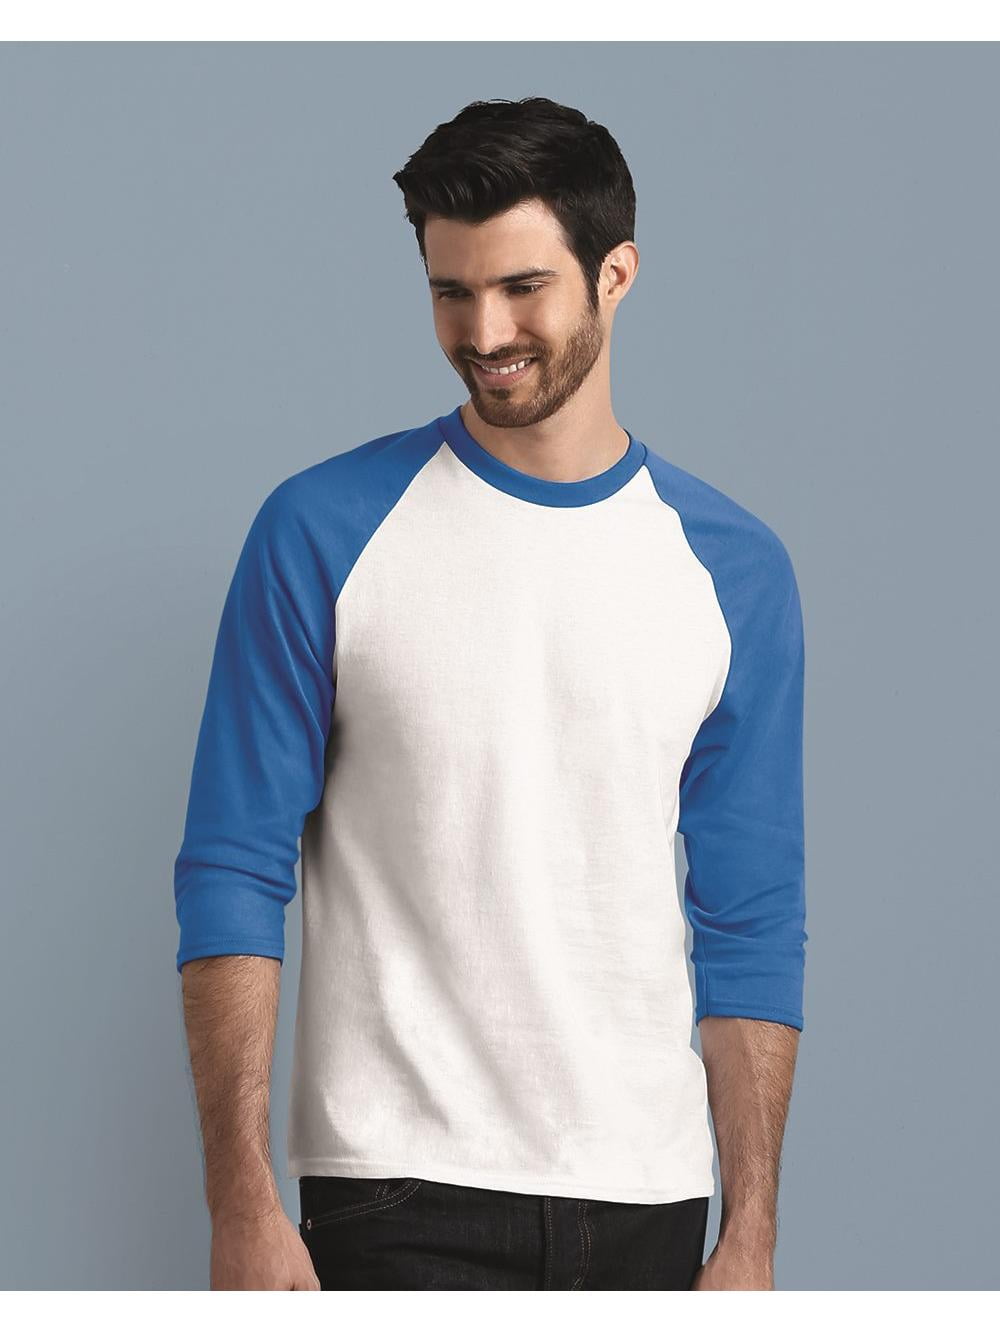 Silverchair Young Modern Mens Casual Sports Raglan Shirt 3/4 Sleeve Baseball Print T-Shirt Top 